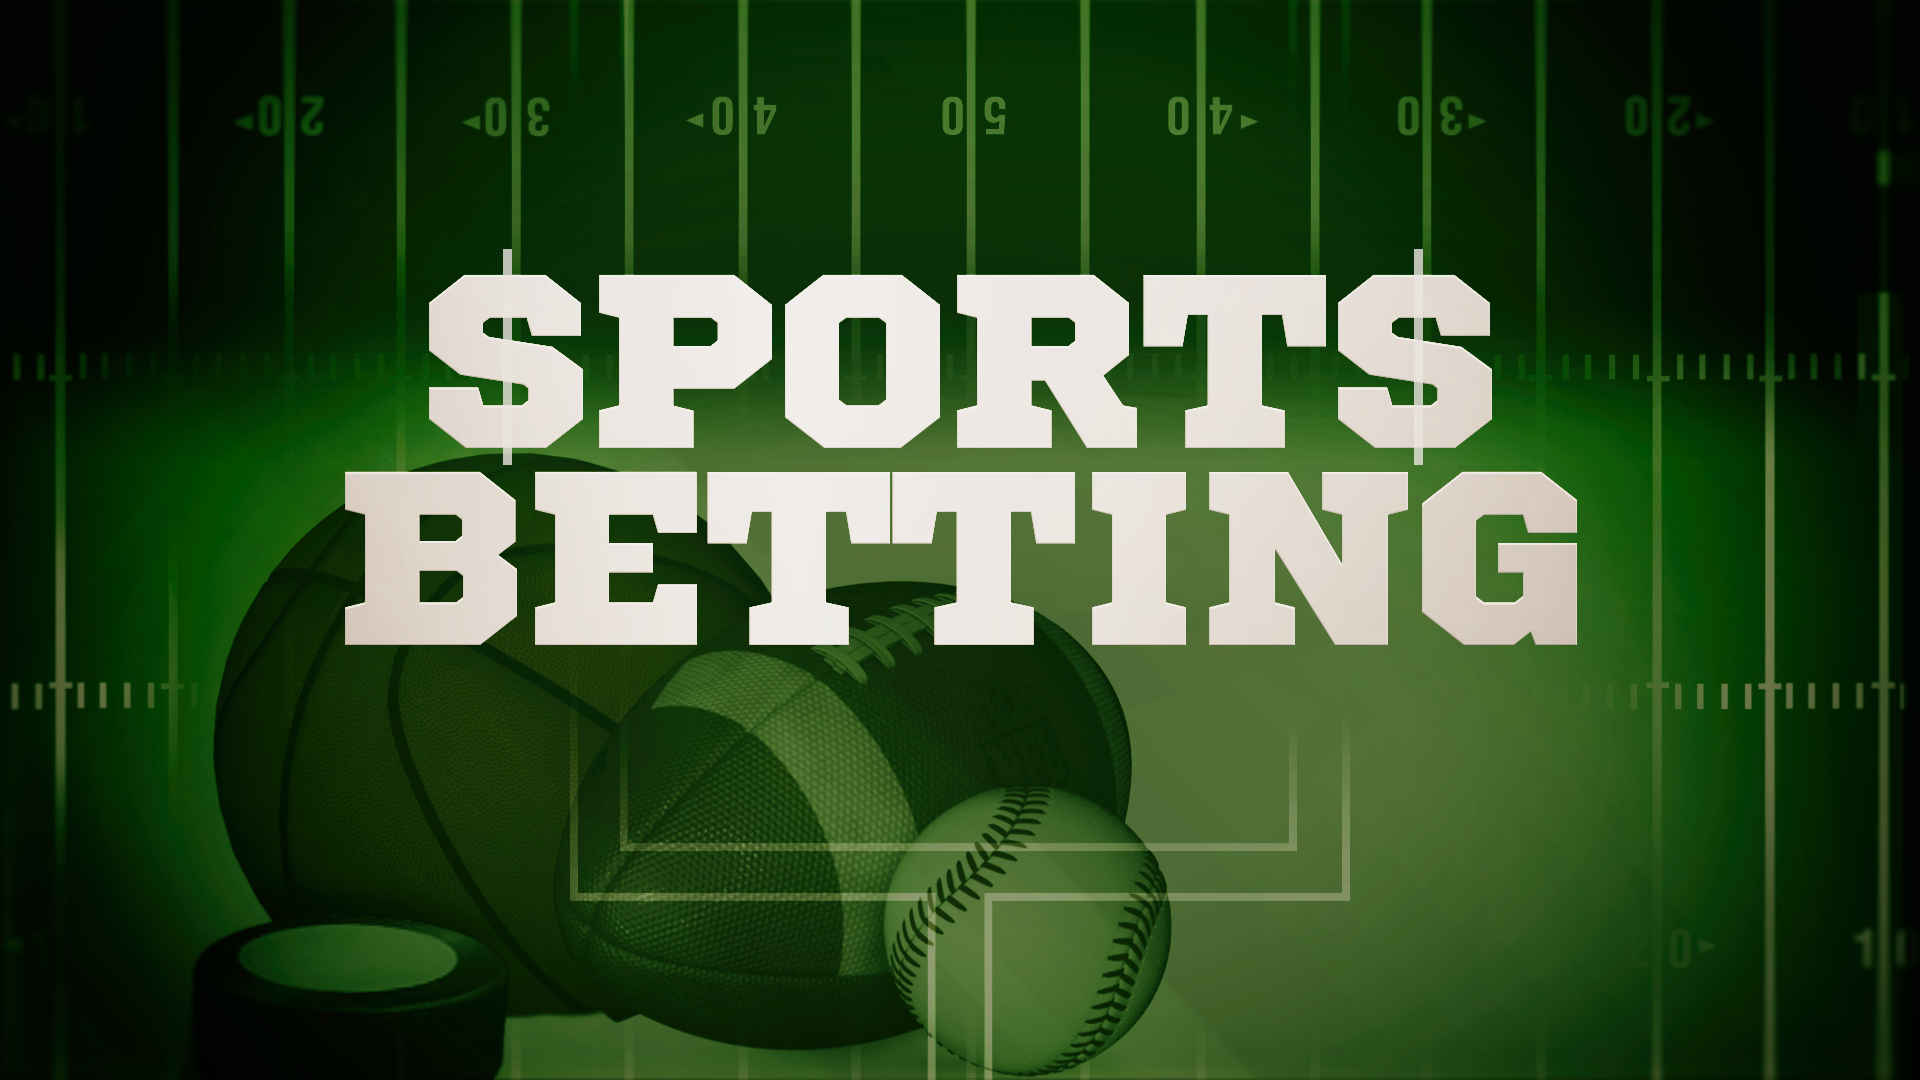 Sports Betting in Michigan Declined Due to Coronavirus